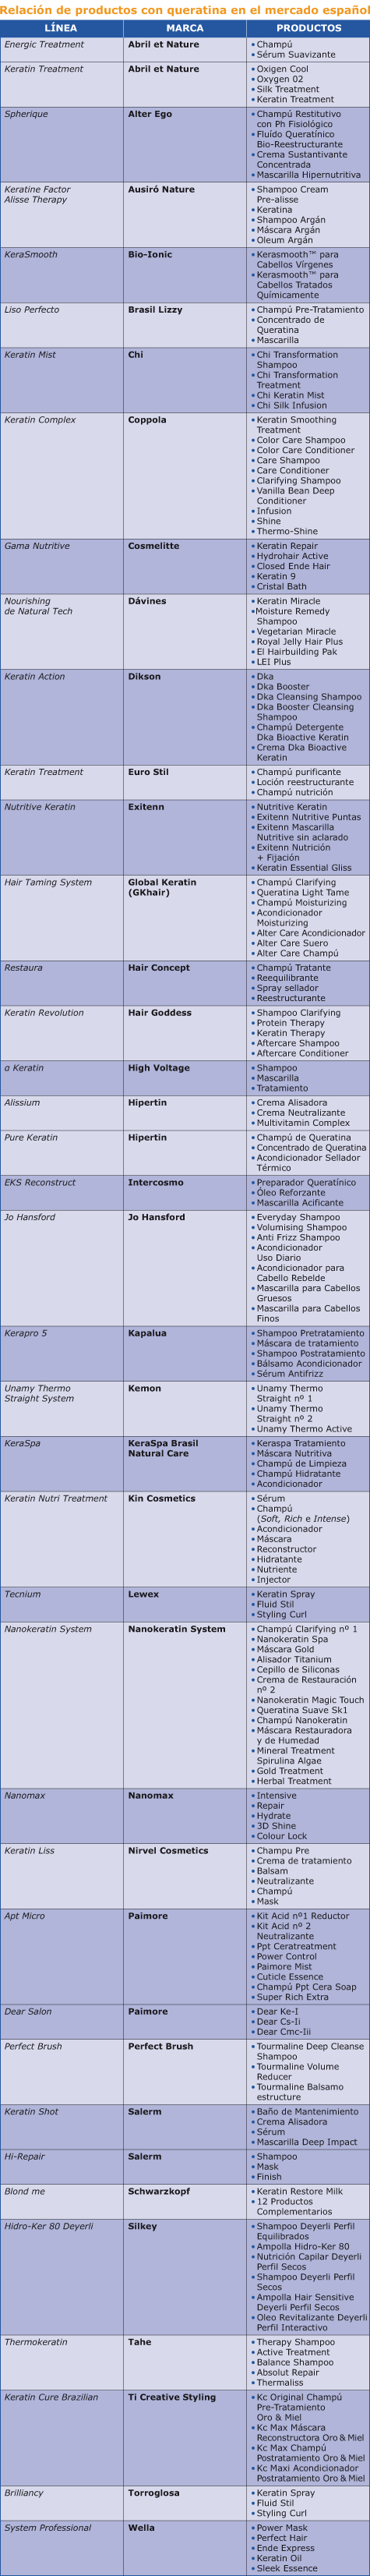 tabla comparativa queratinas